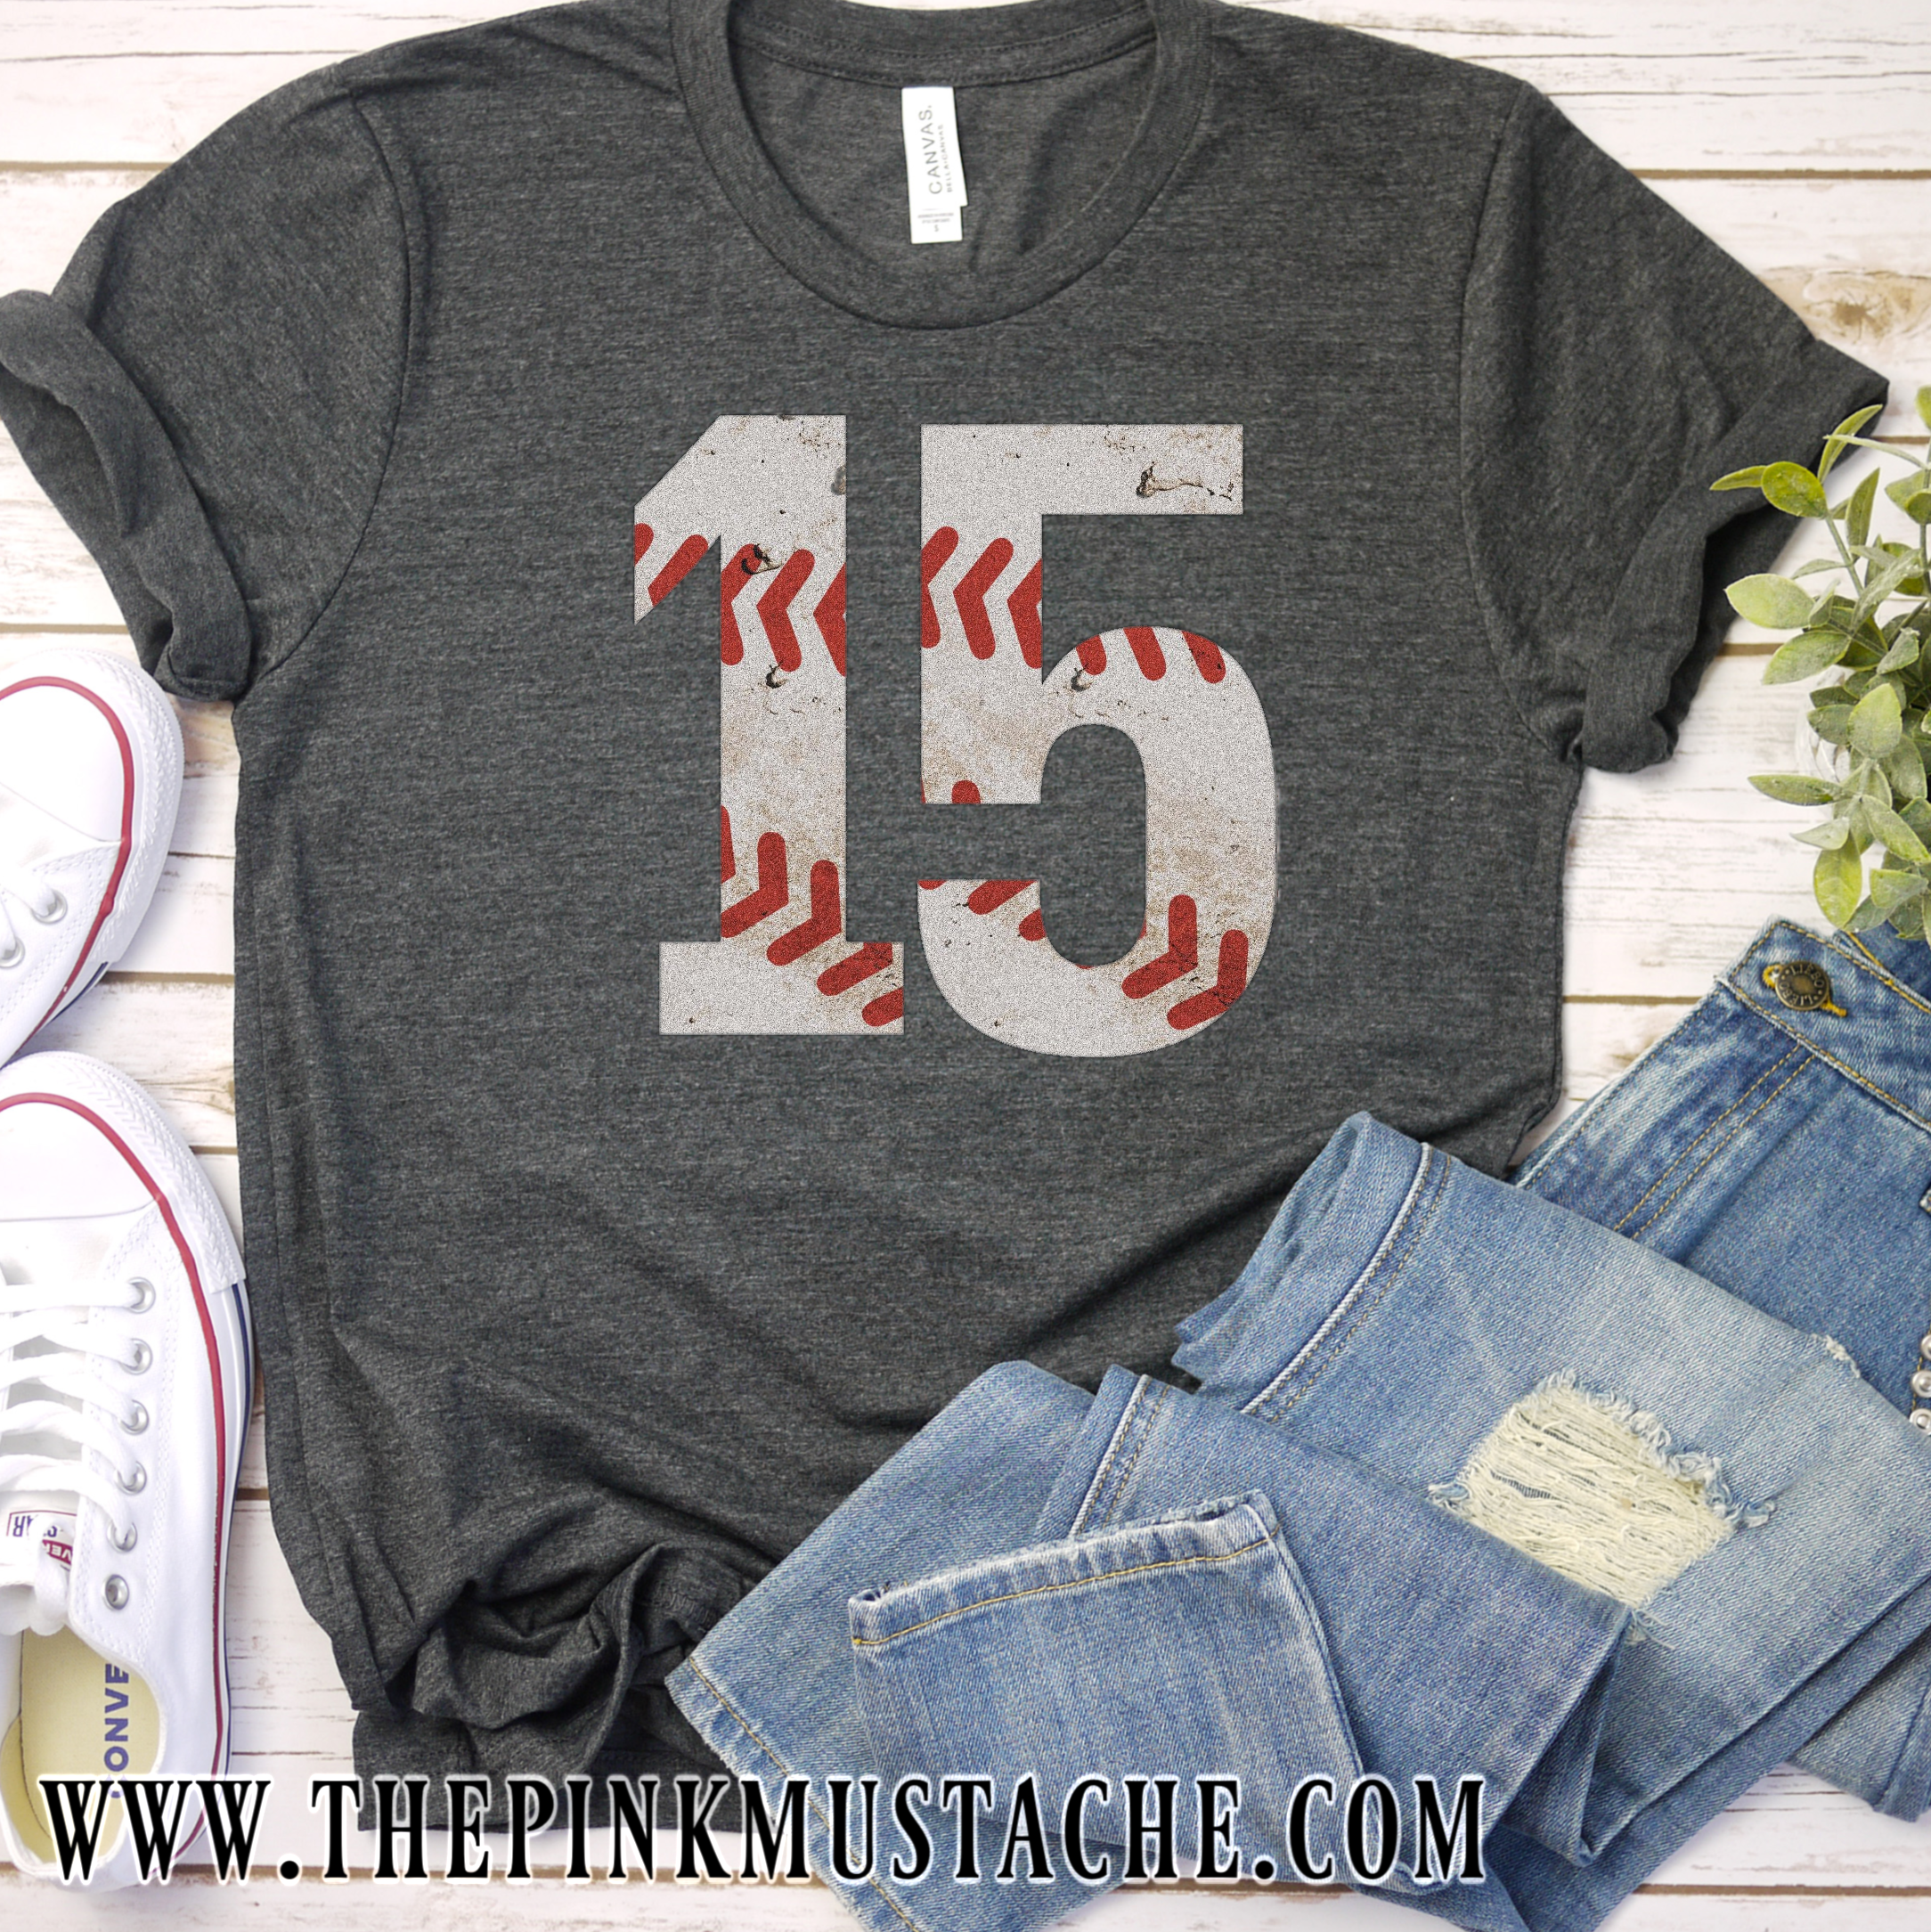 Baseball Mom Shirt - Personalized Baseball Mom T-Shirt | ILYB Designs S / Add Name